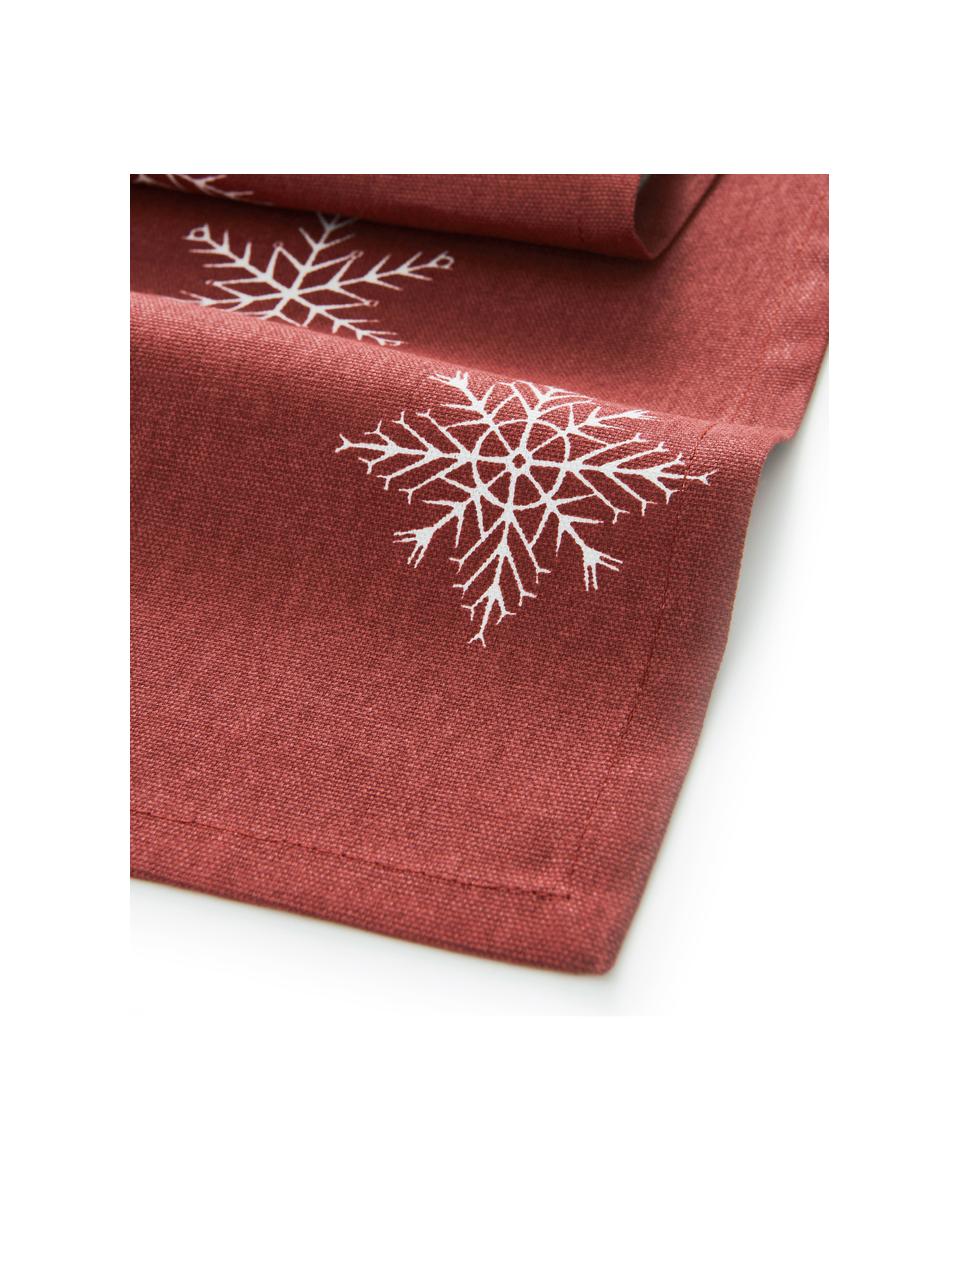 Tafelloper Snow met stermotieven, 100% katoen, afkomstig van duurzame katoenteelt, Rood, wit, B 40 x L 140 cm